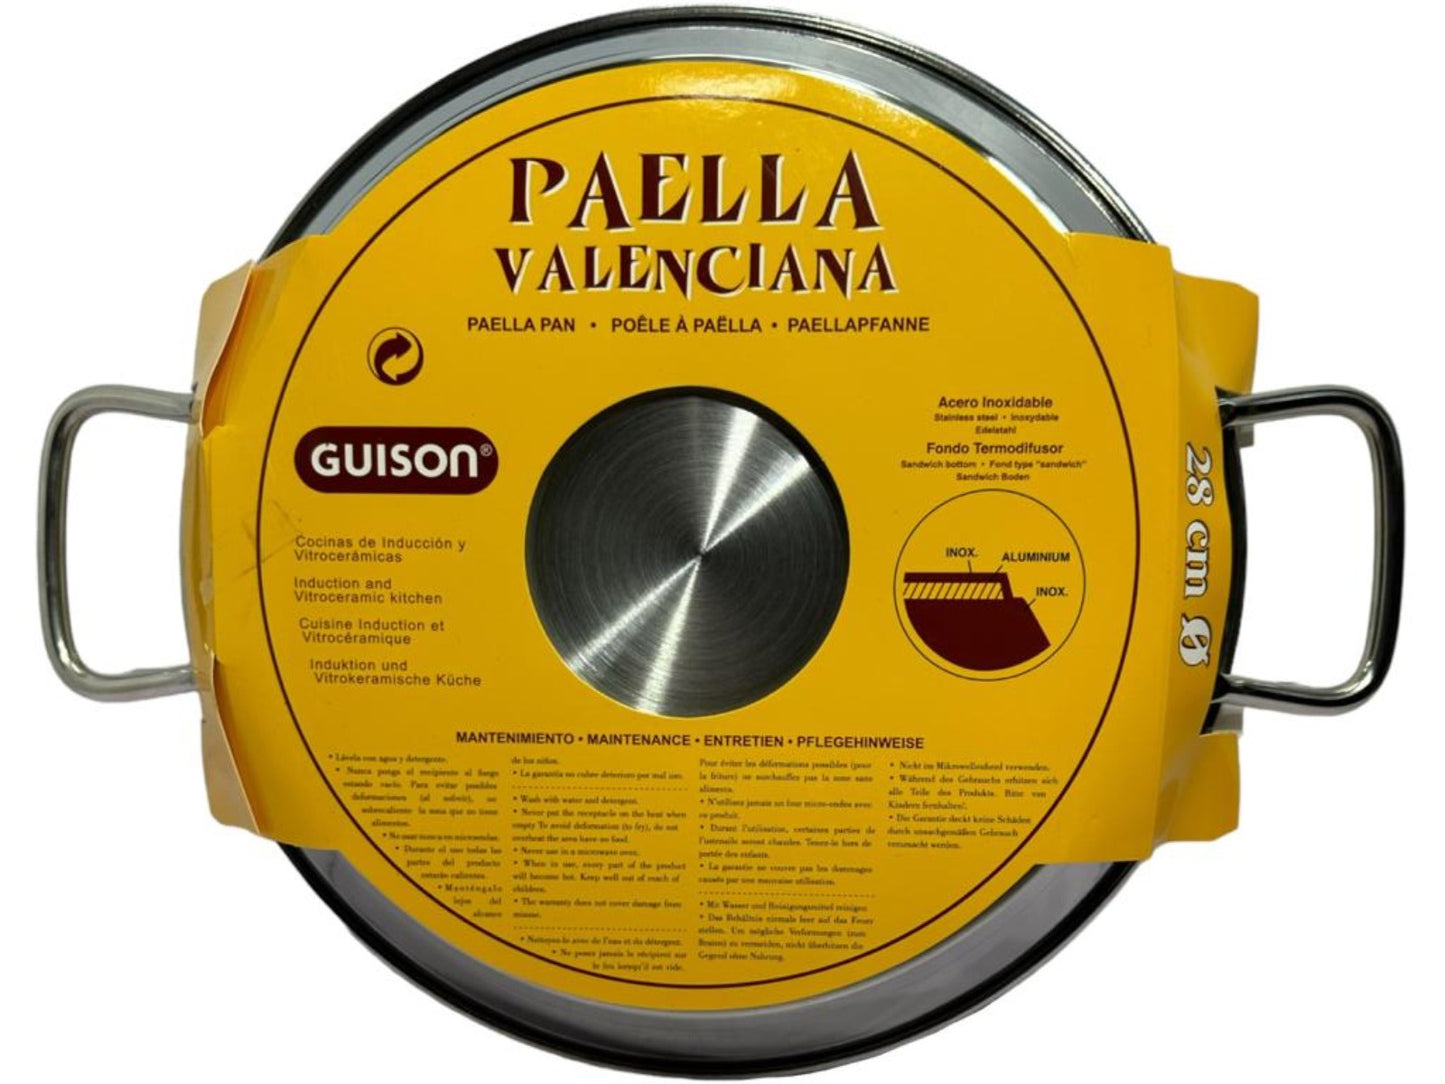 Garcima Guison Paella Valenciana Induccion Spanish Paella Pan 28cm